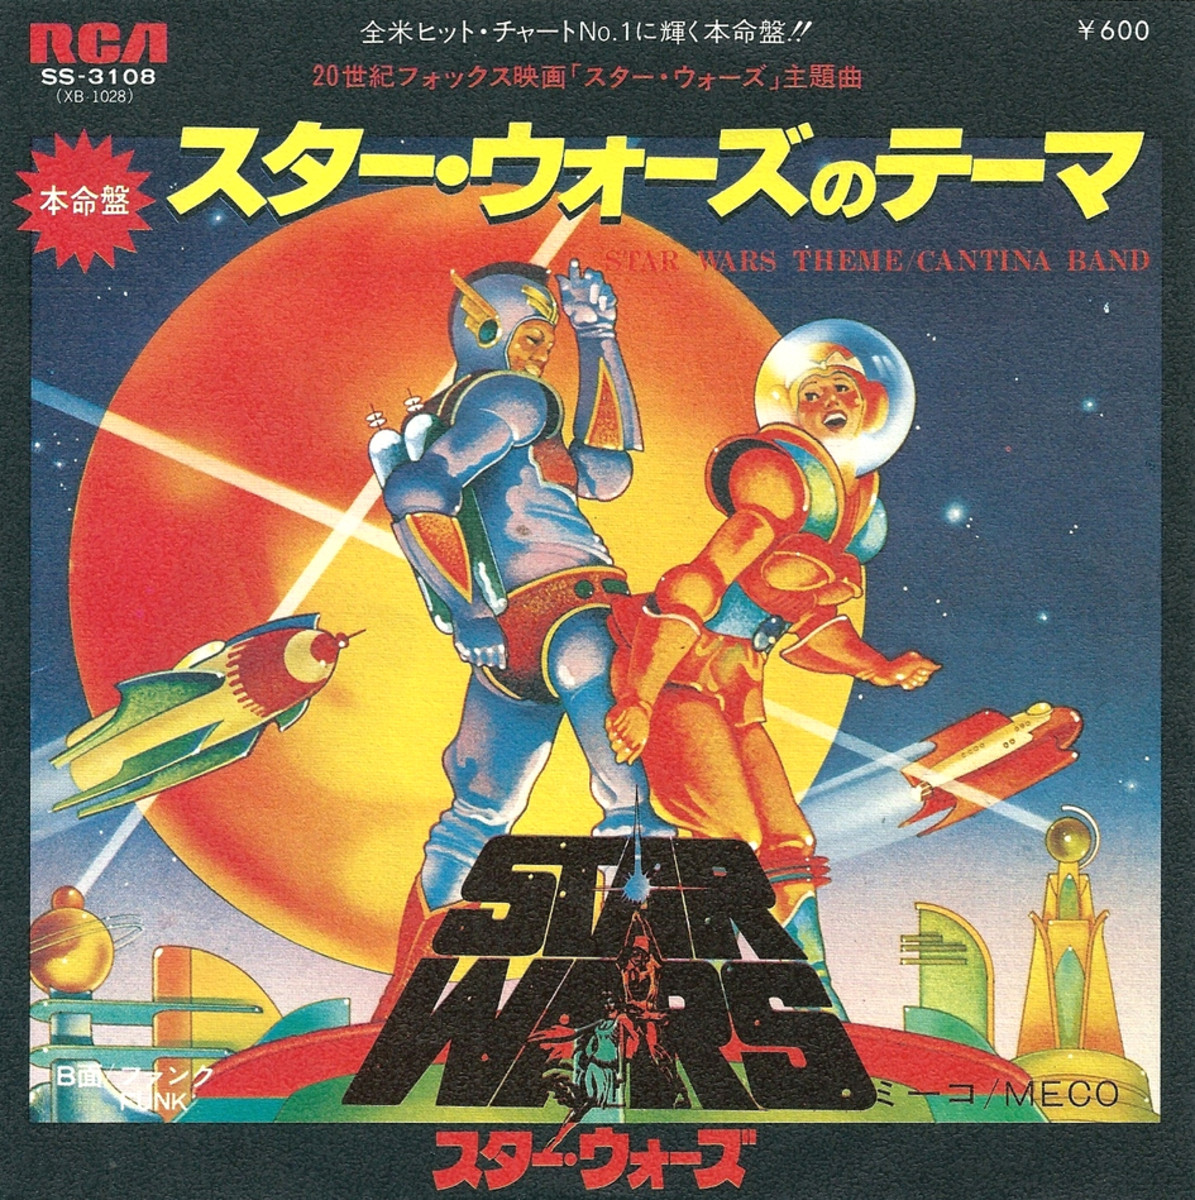 Meco "Star Wars Theme" b/w "Cantina Band" RCA Records SS-3108 7" Single Vinyl Record, Japanese Pressing (1977)